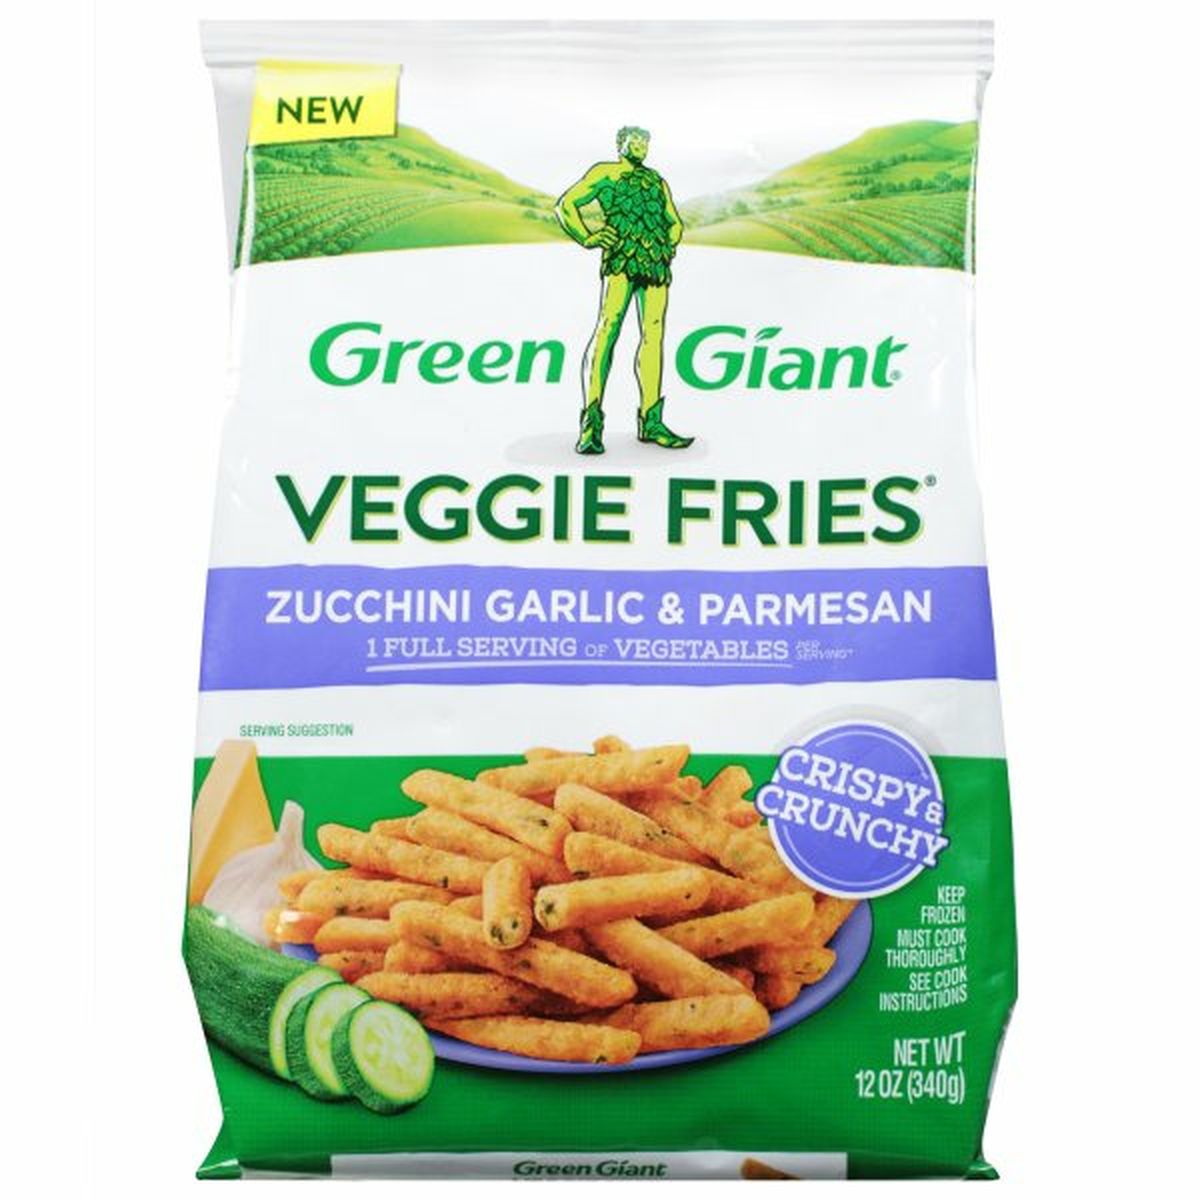 Calories in Green Giant Veggie Fries, Zucchini Garlic & Parmesan, Crispy & Crunchy